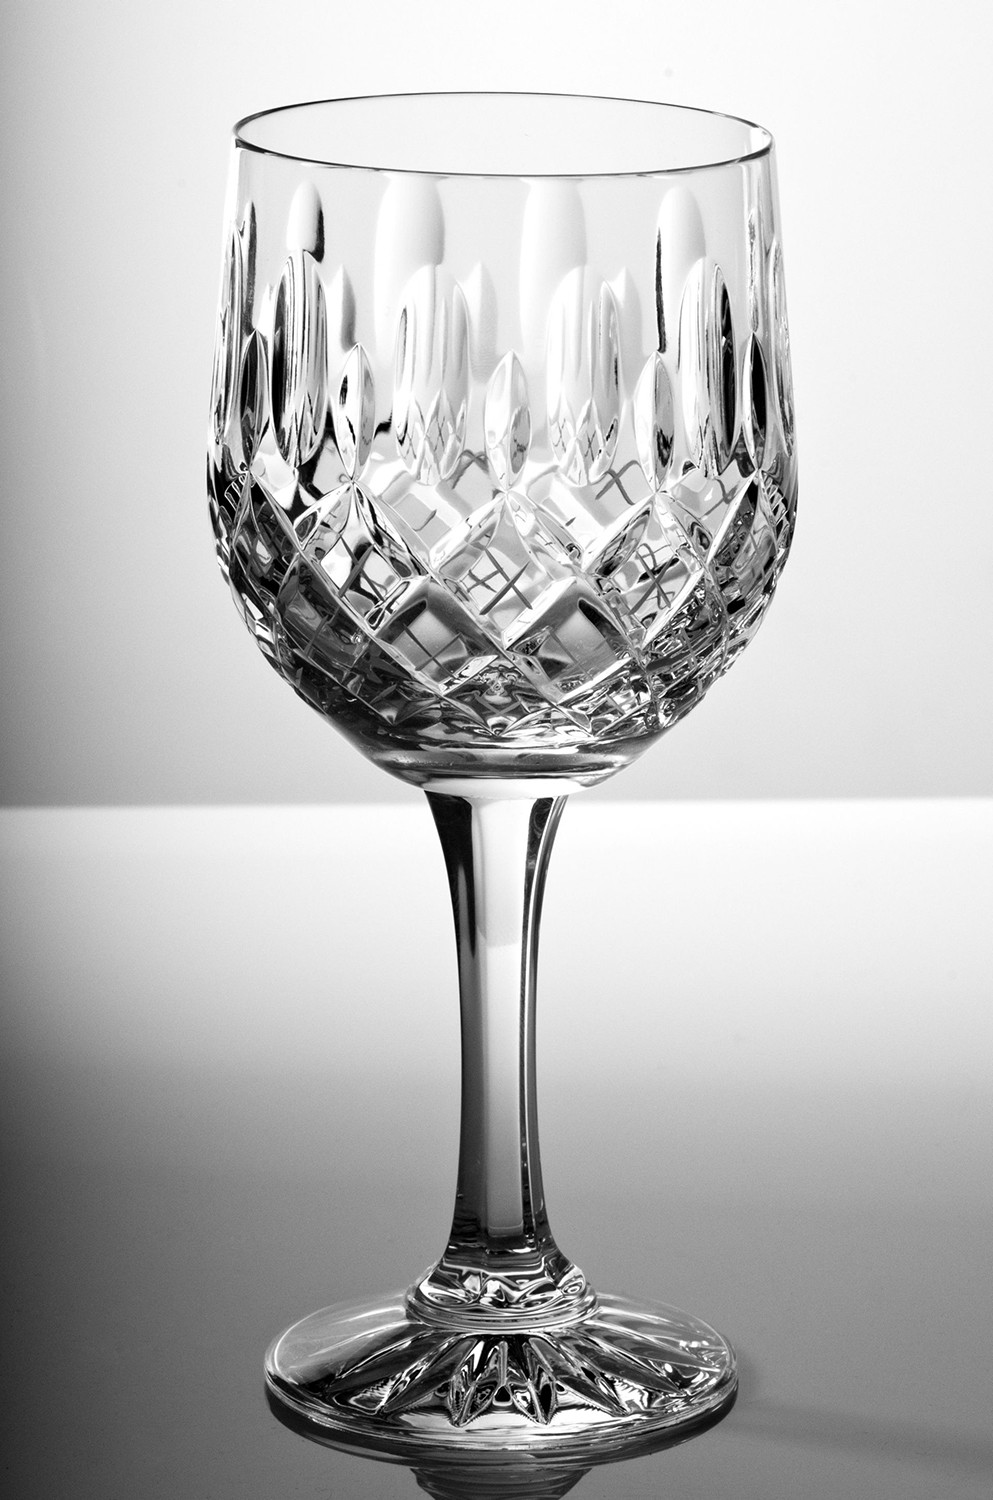 Crucis 24 Lead Crystal Wine Glasses Set Of 6 Wine Glasses Product Categories